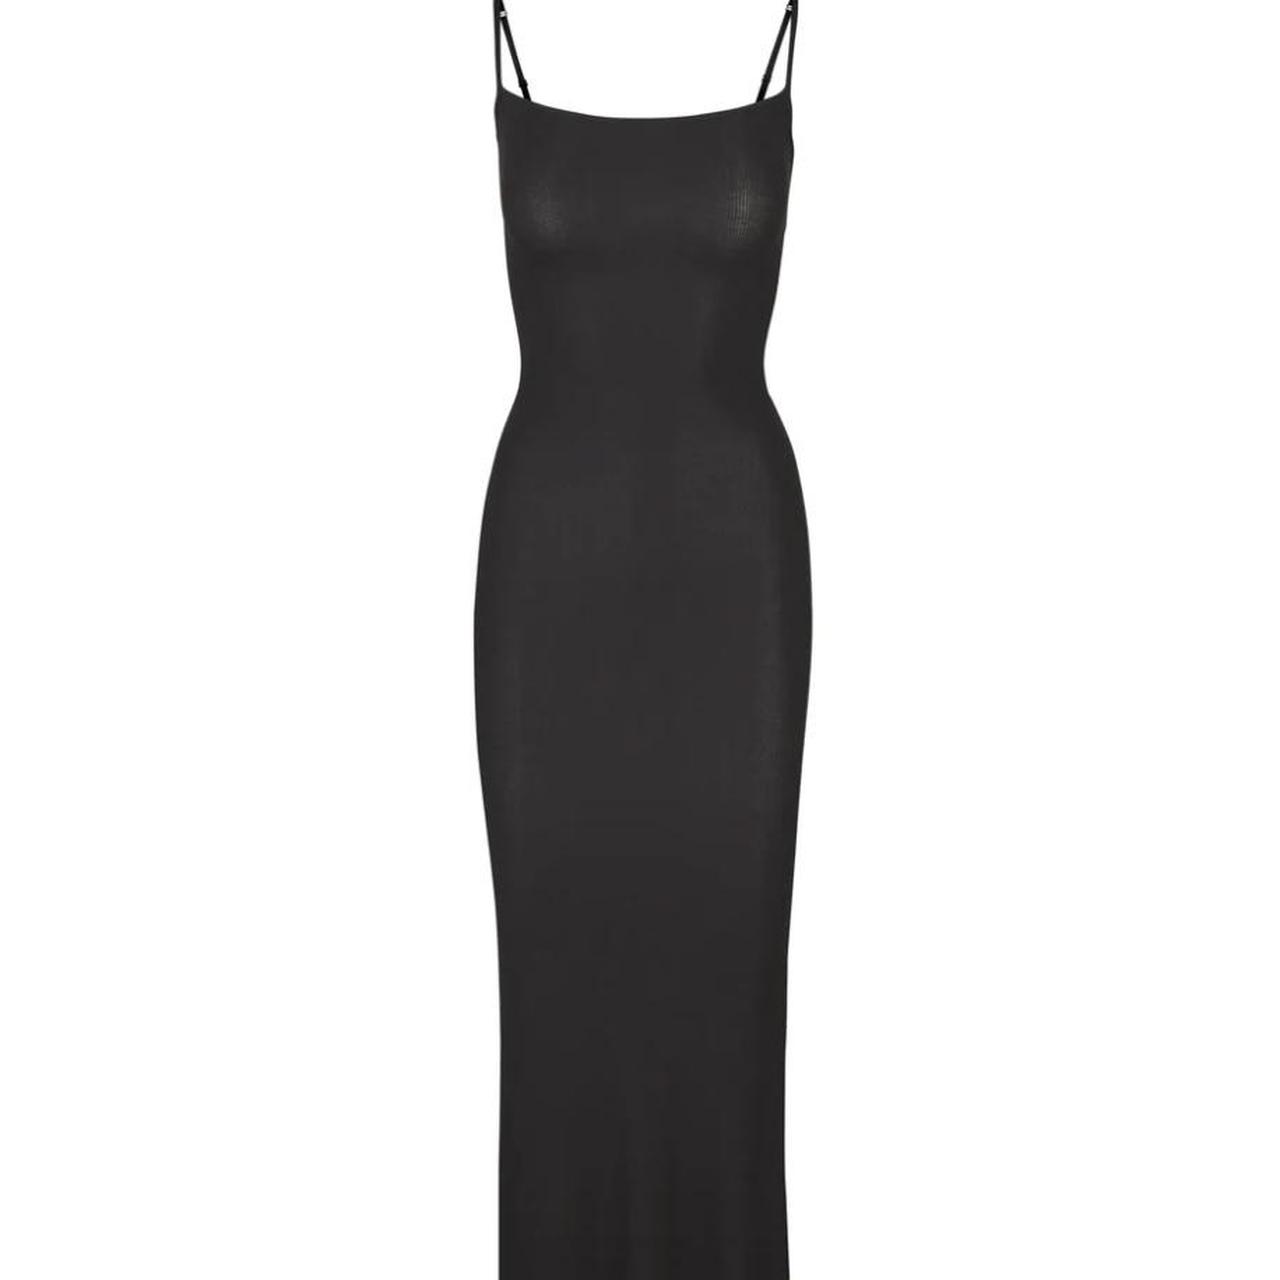 SKIMS Long Slip Dress in Classic Onyx (black) NEW - Depop